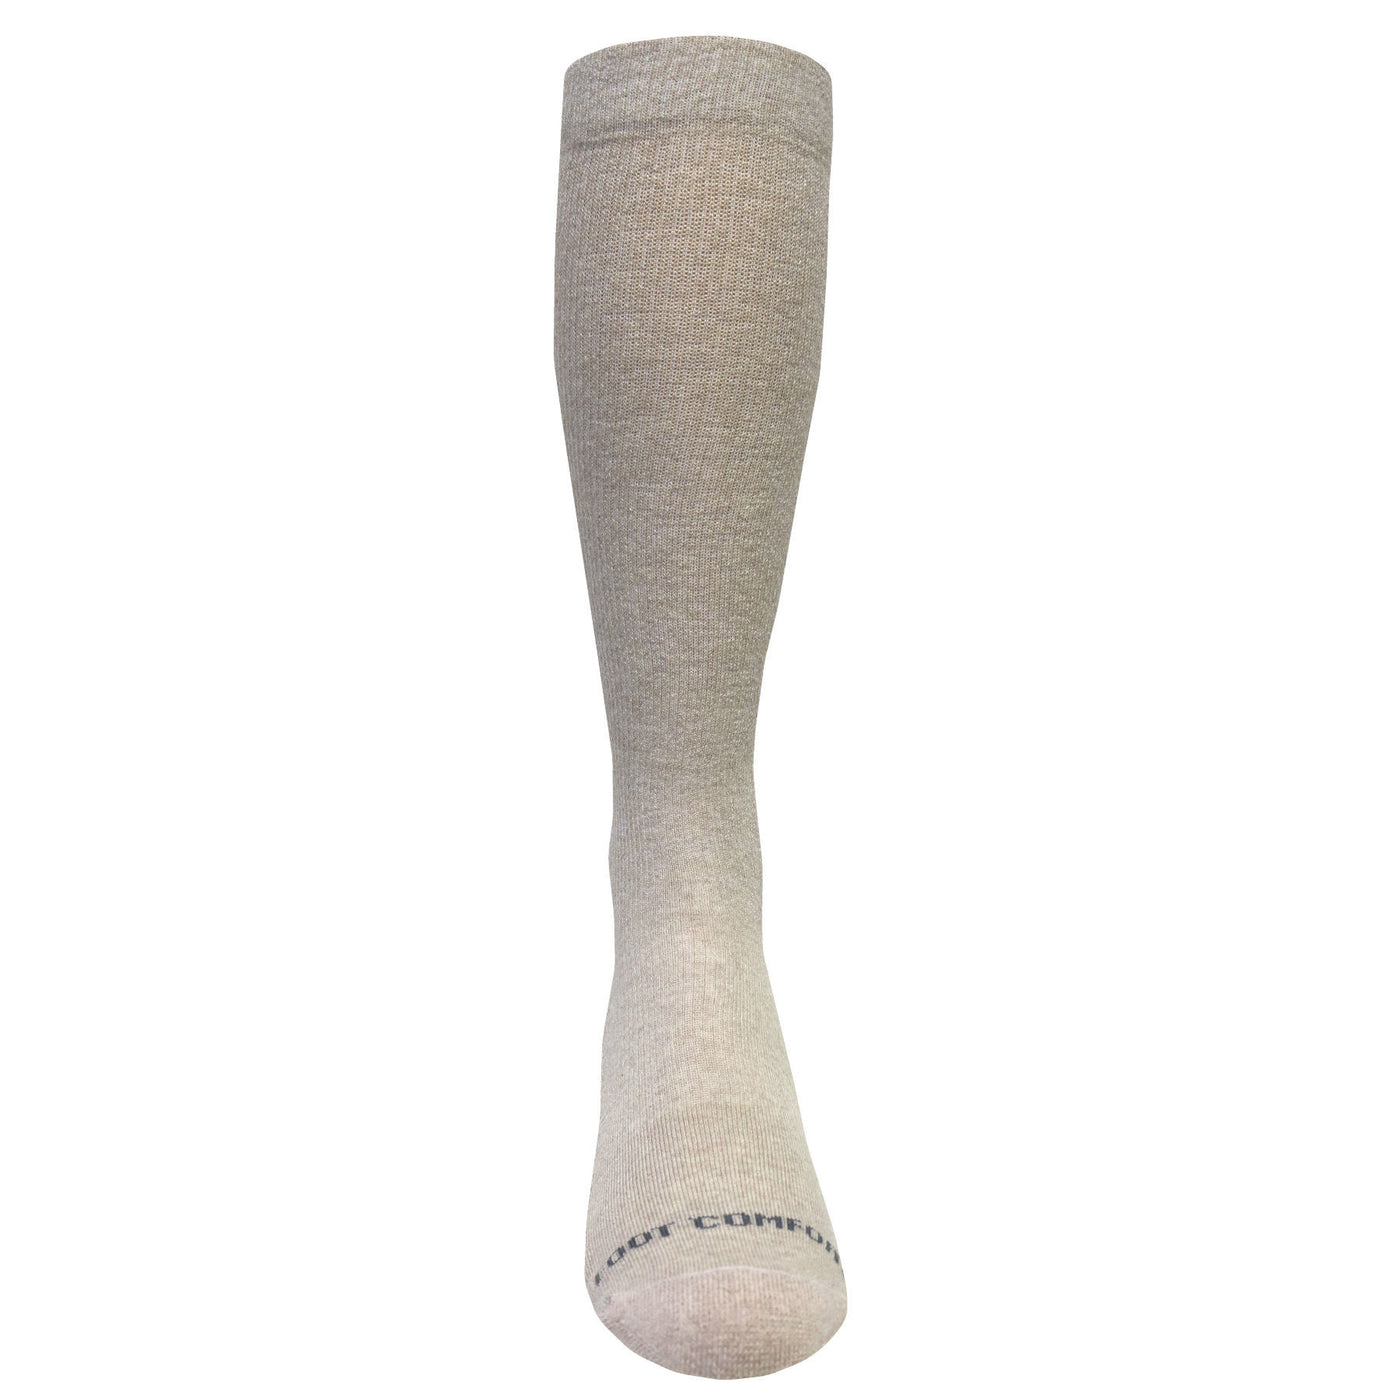 Foot Comfort Recover Graduated Compression Khaki OTC Socks